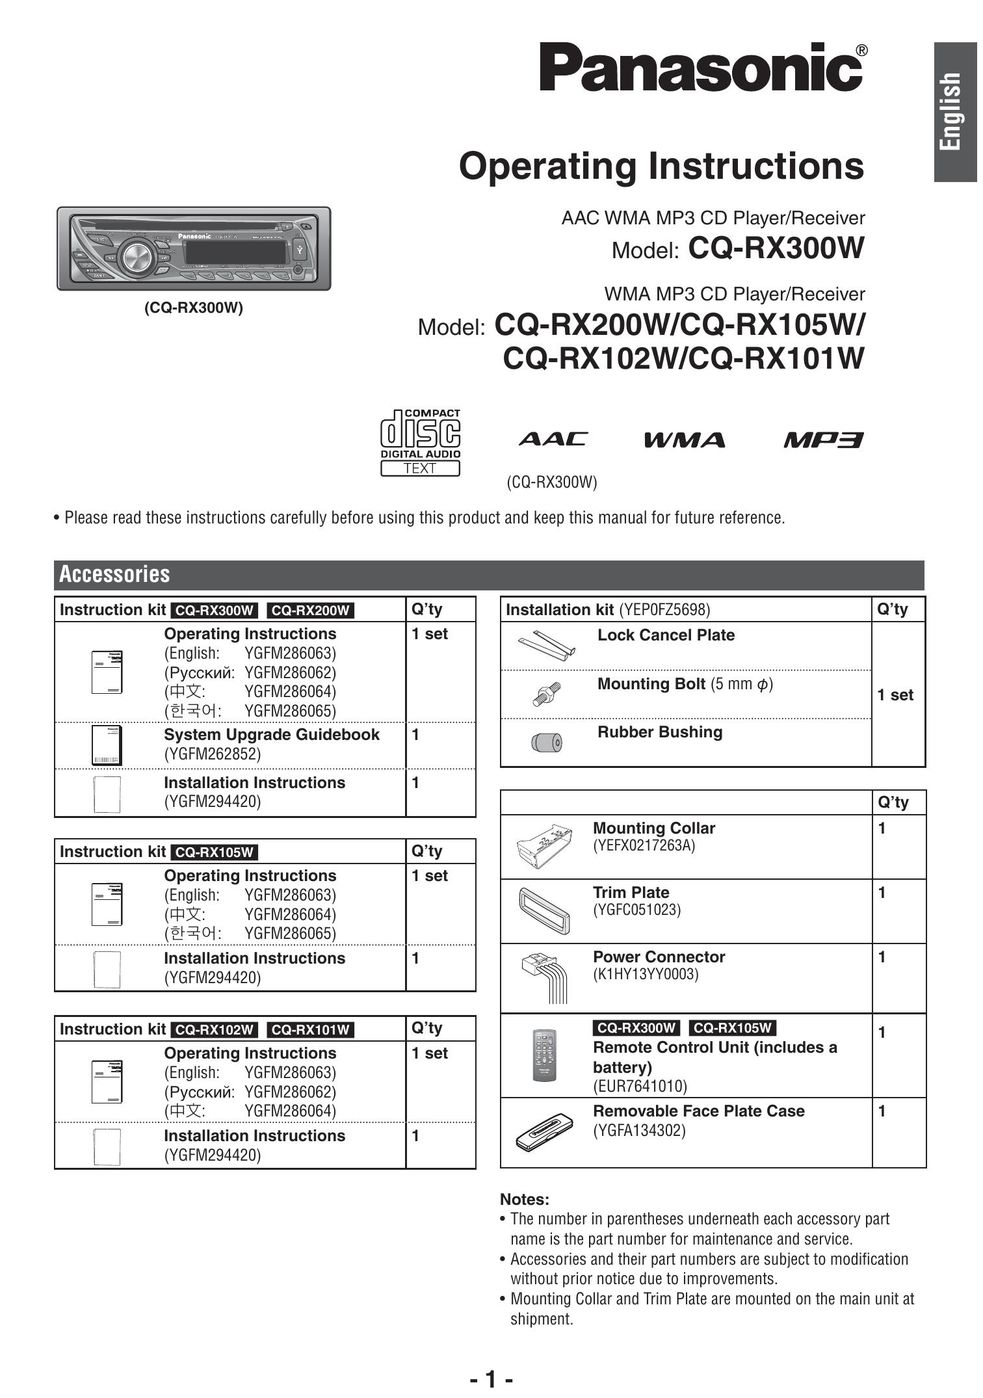 Panasonic CQ-RX300W MP3 Player User Manual